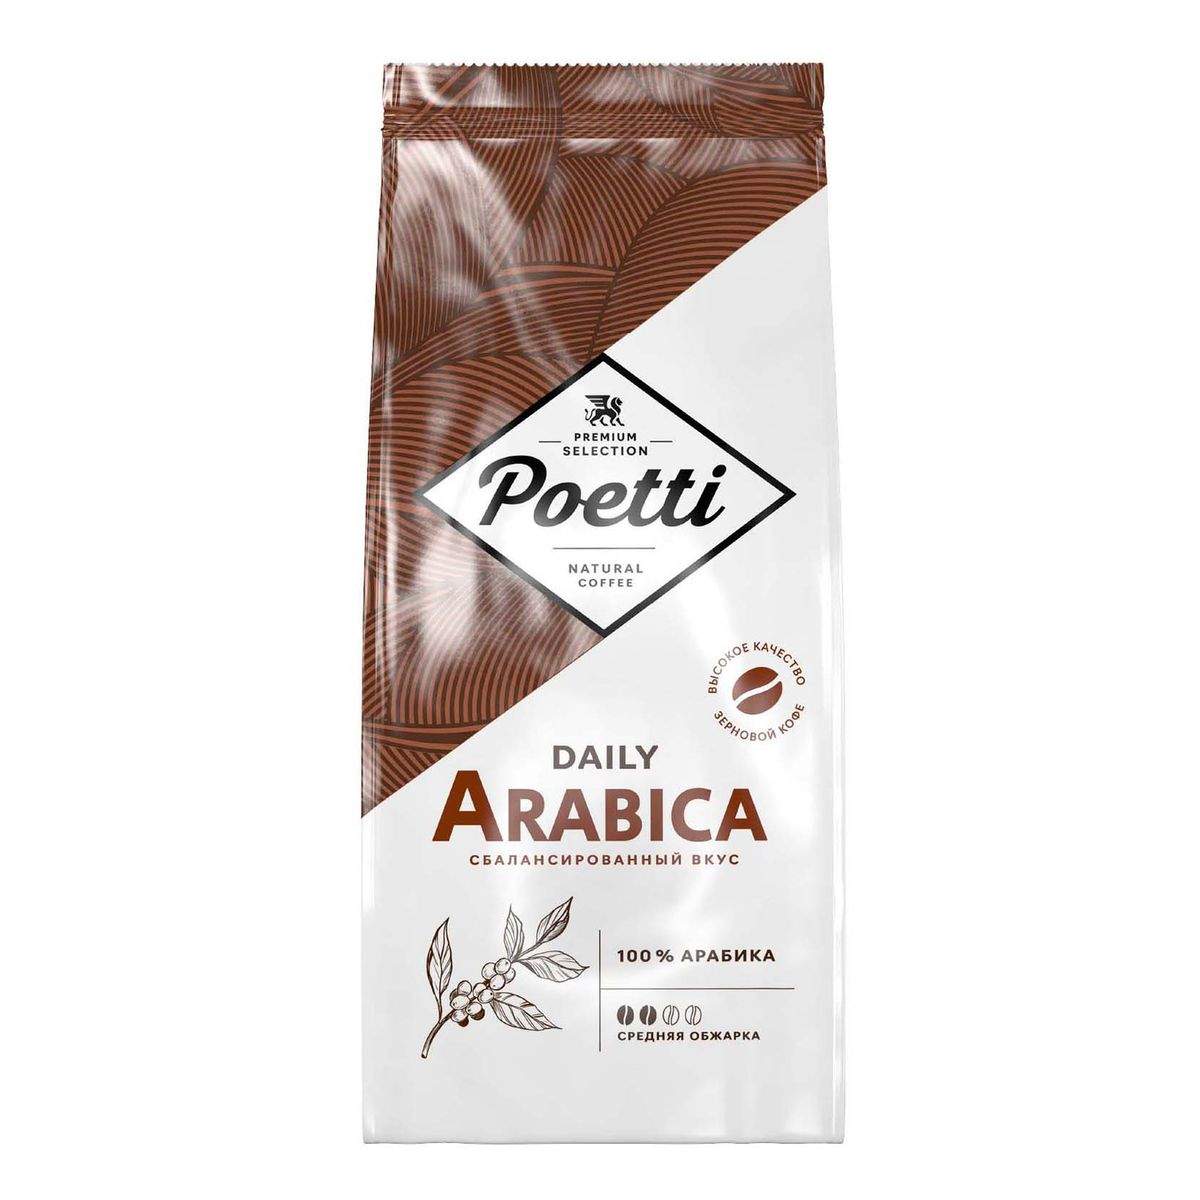 Купить кофе Poetti Daily Arabica в зернах 1 кг, цены на Мегамаркет | Артикул: 100059854324